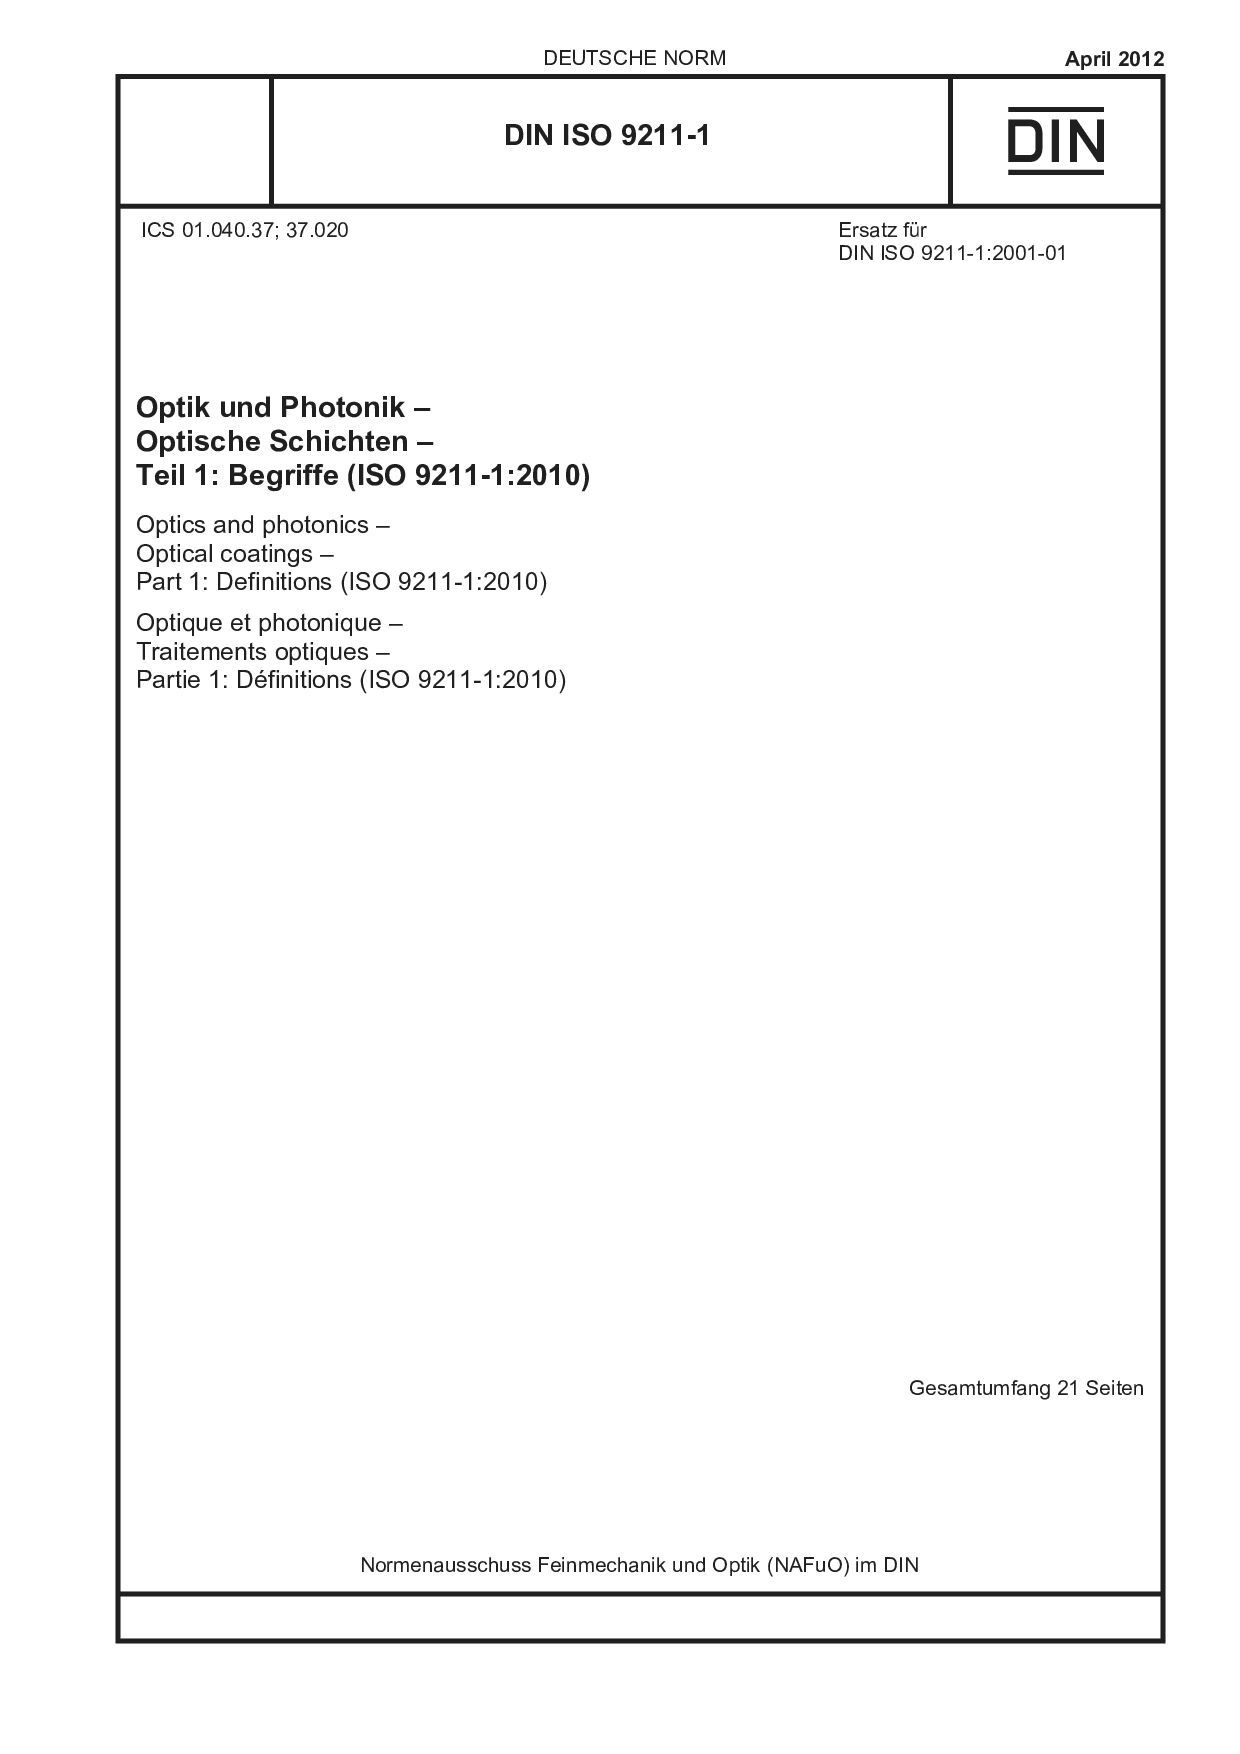 DIN ISO 9211-1:2012